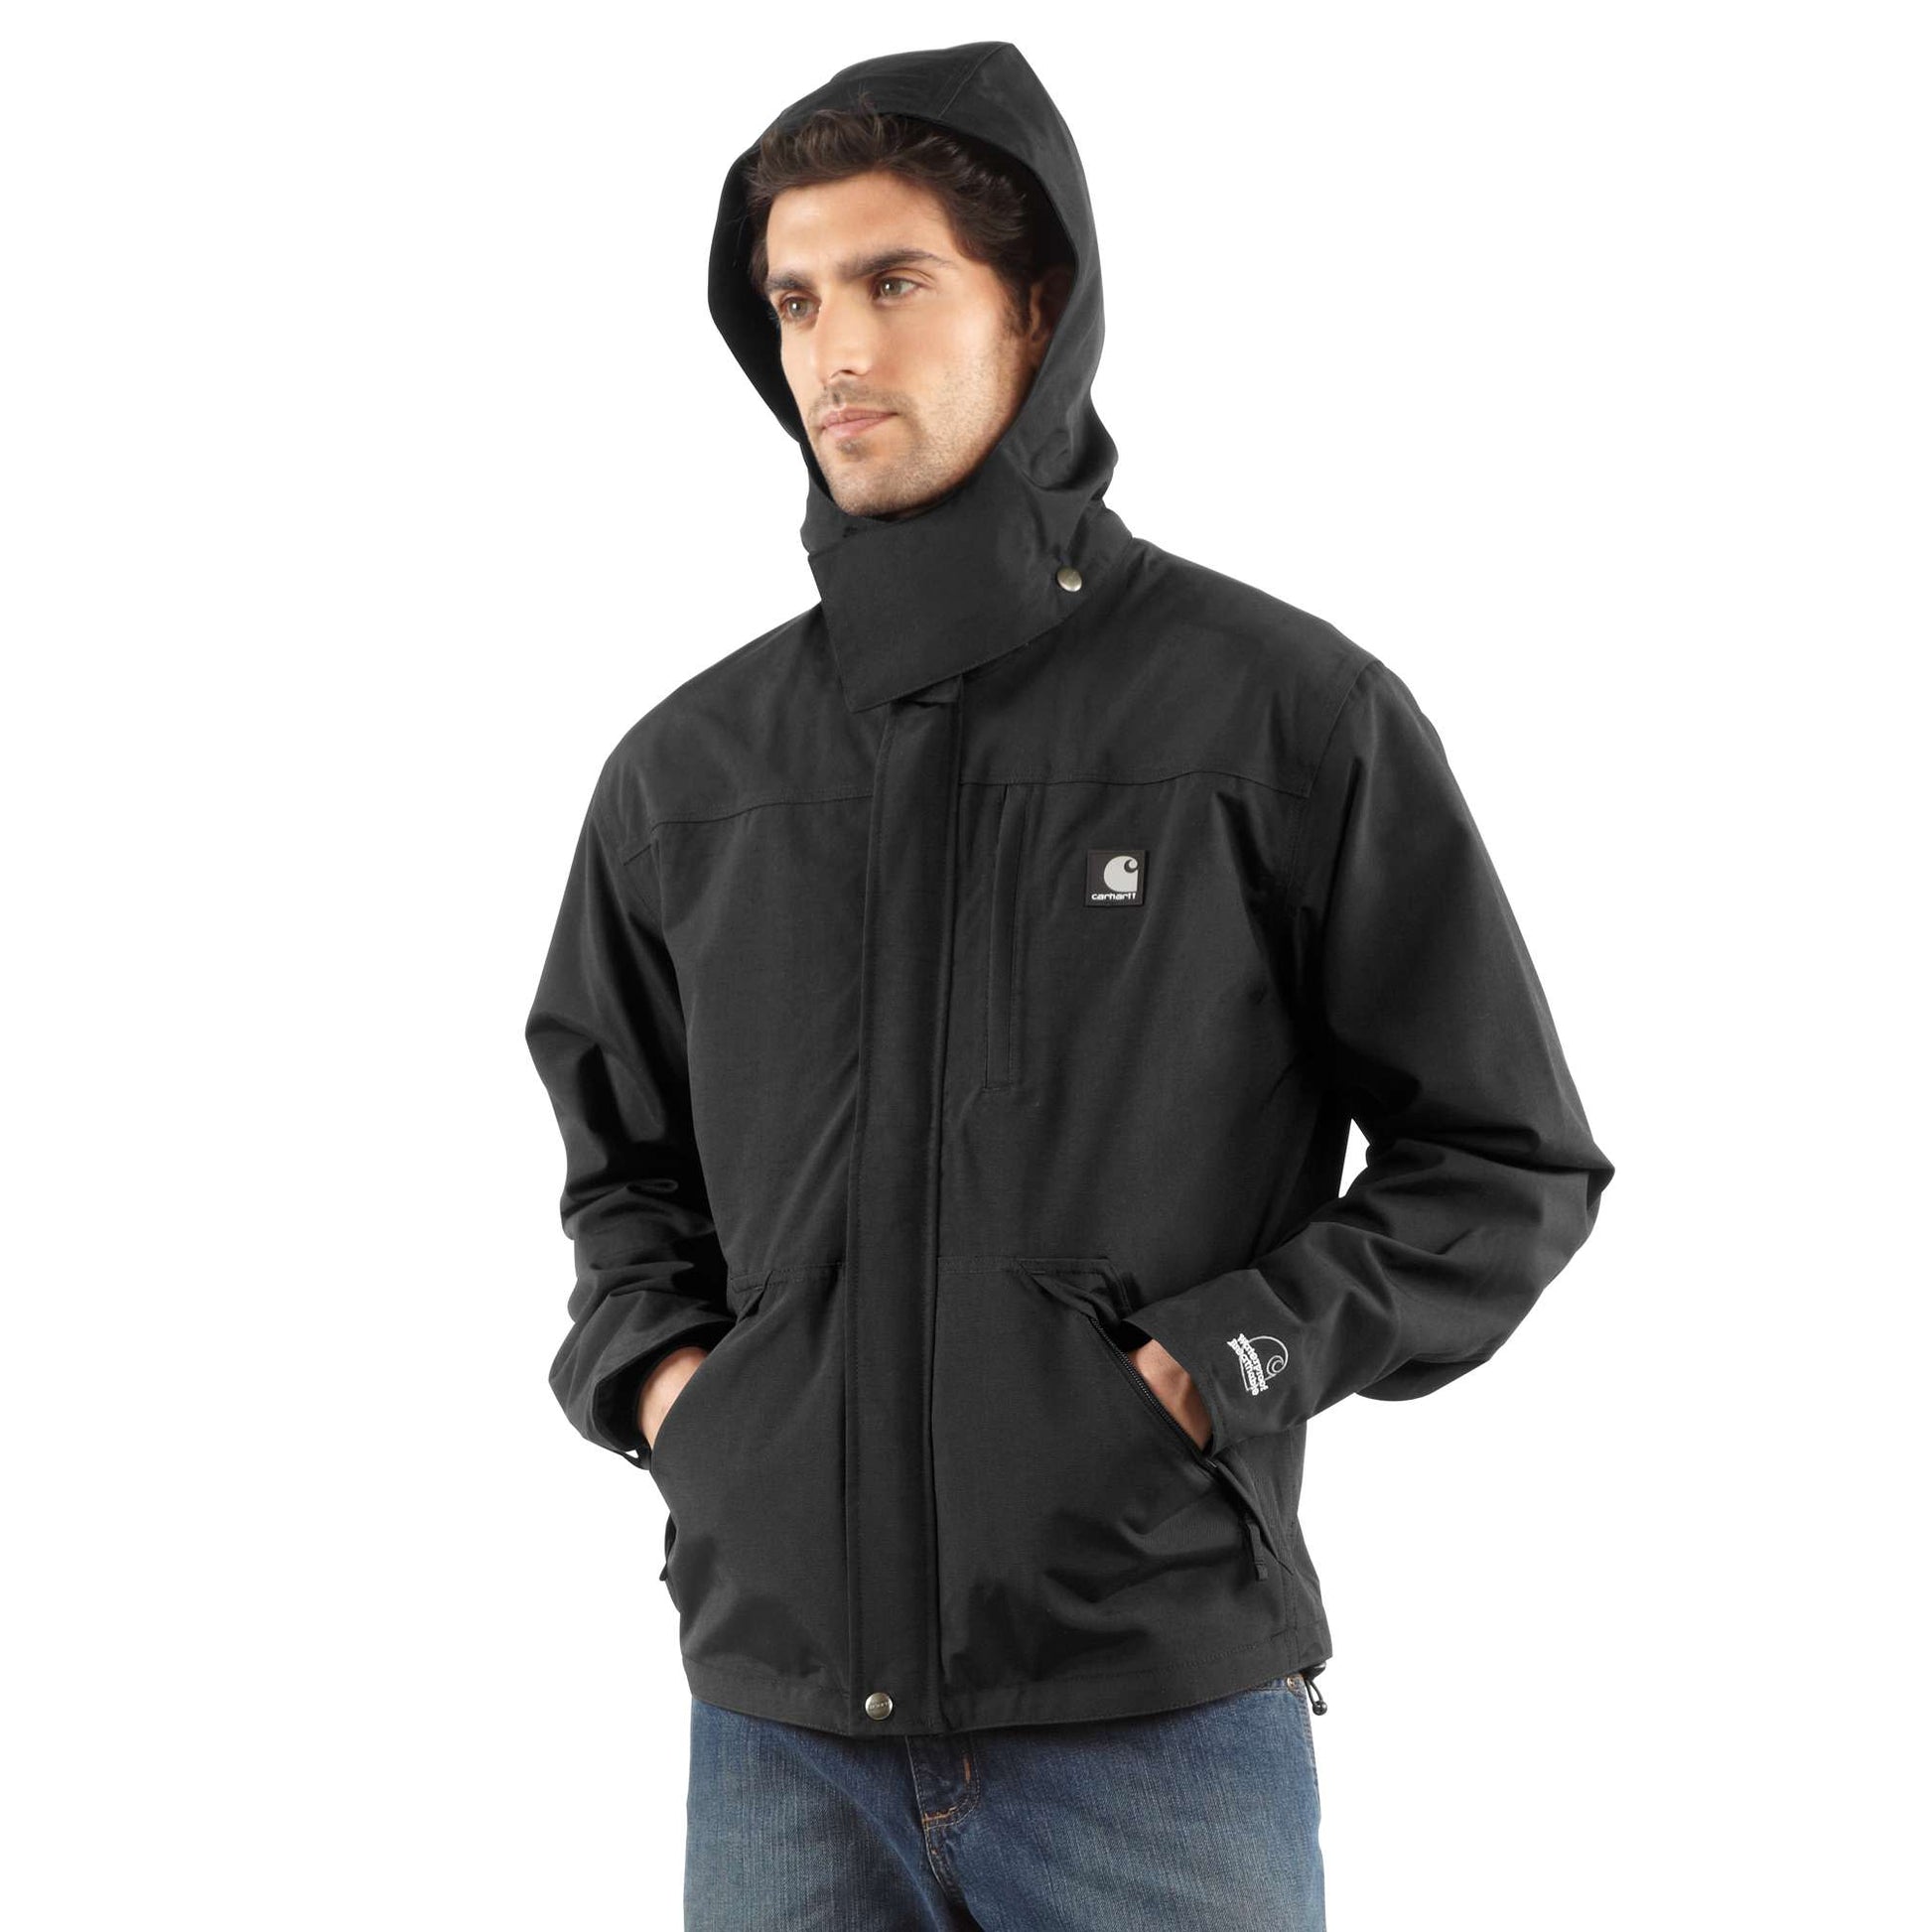 Carhartt Men's Shoreline Jacket, Black, L